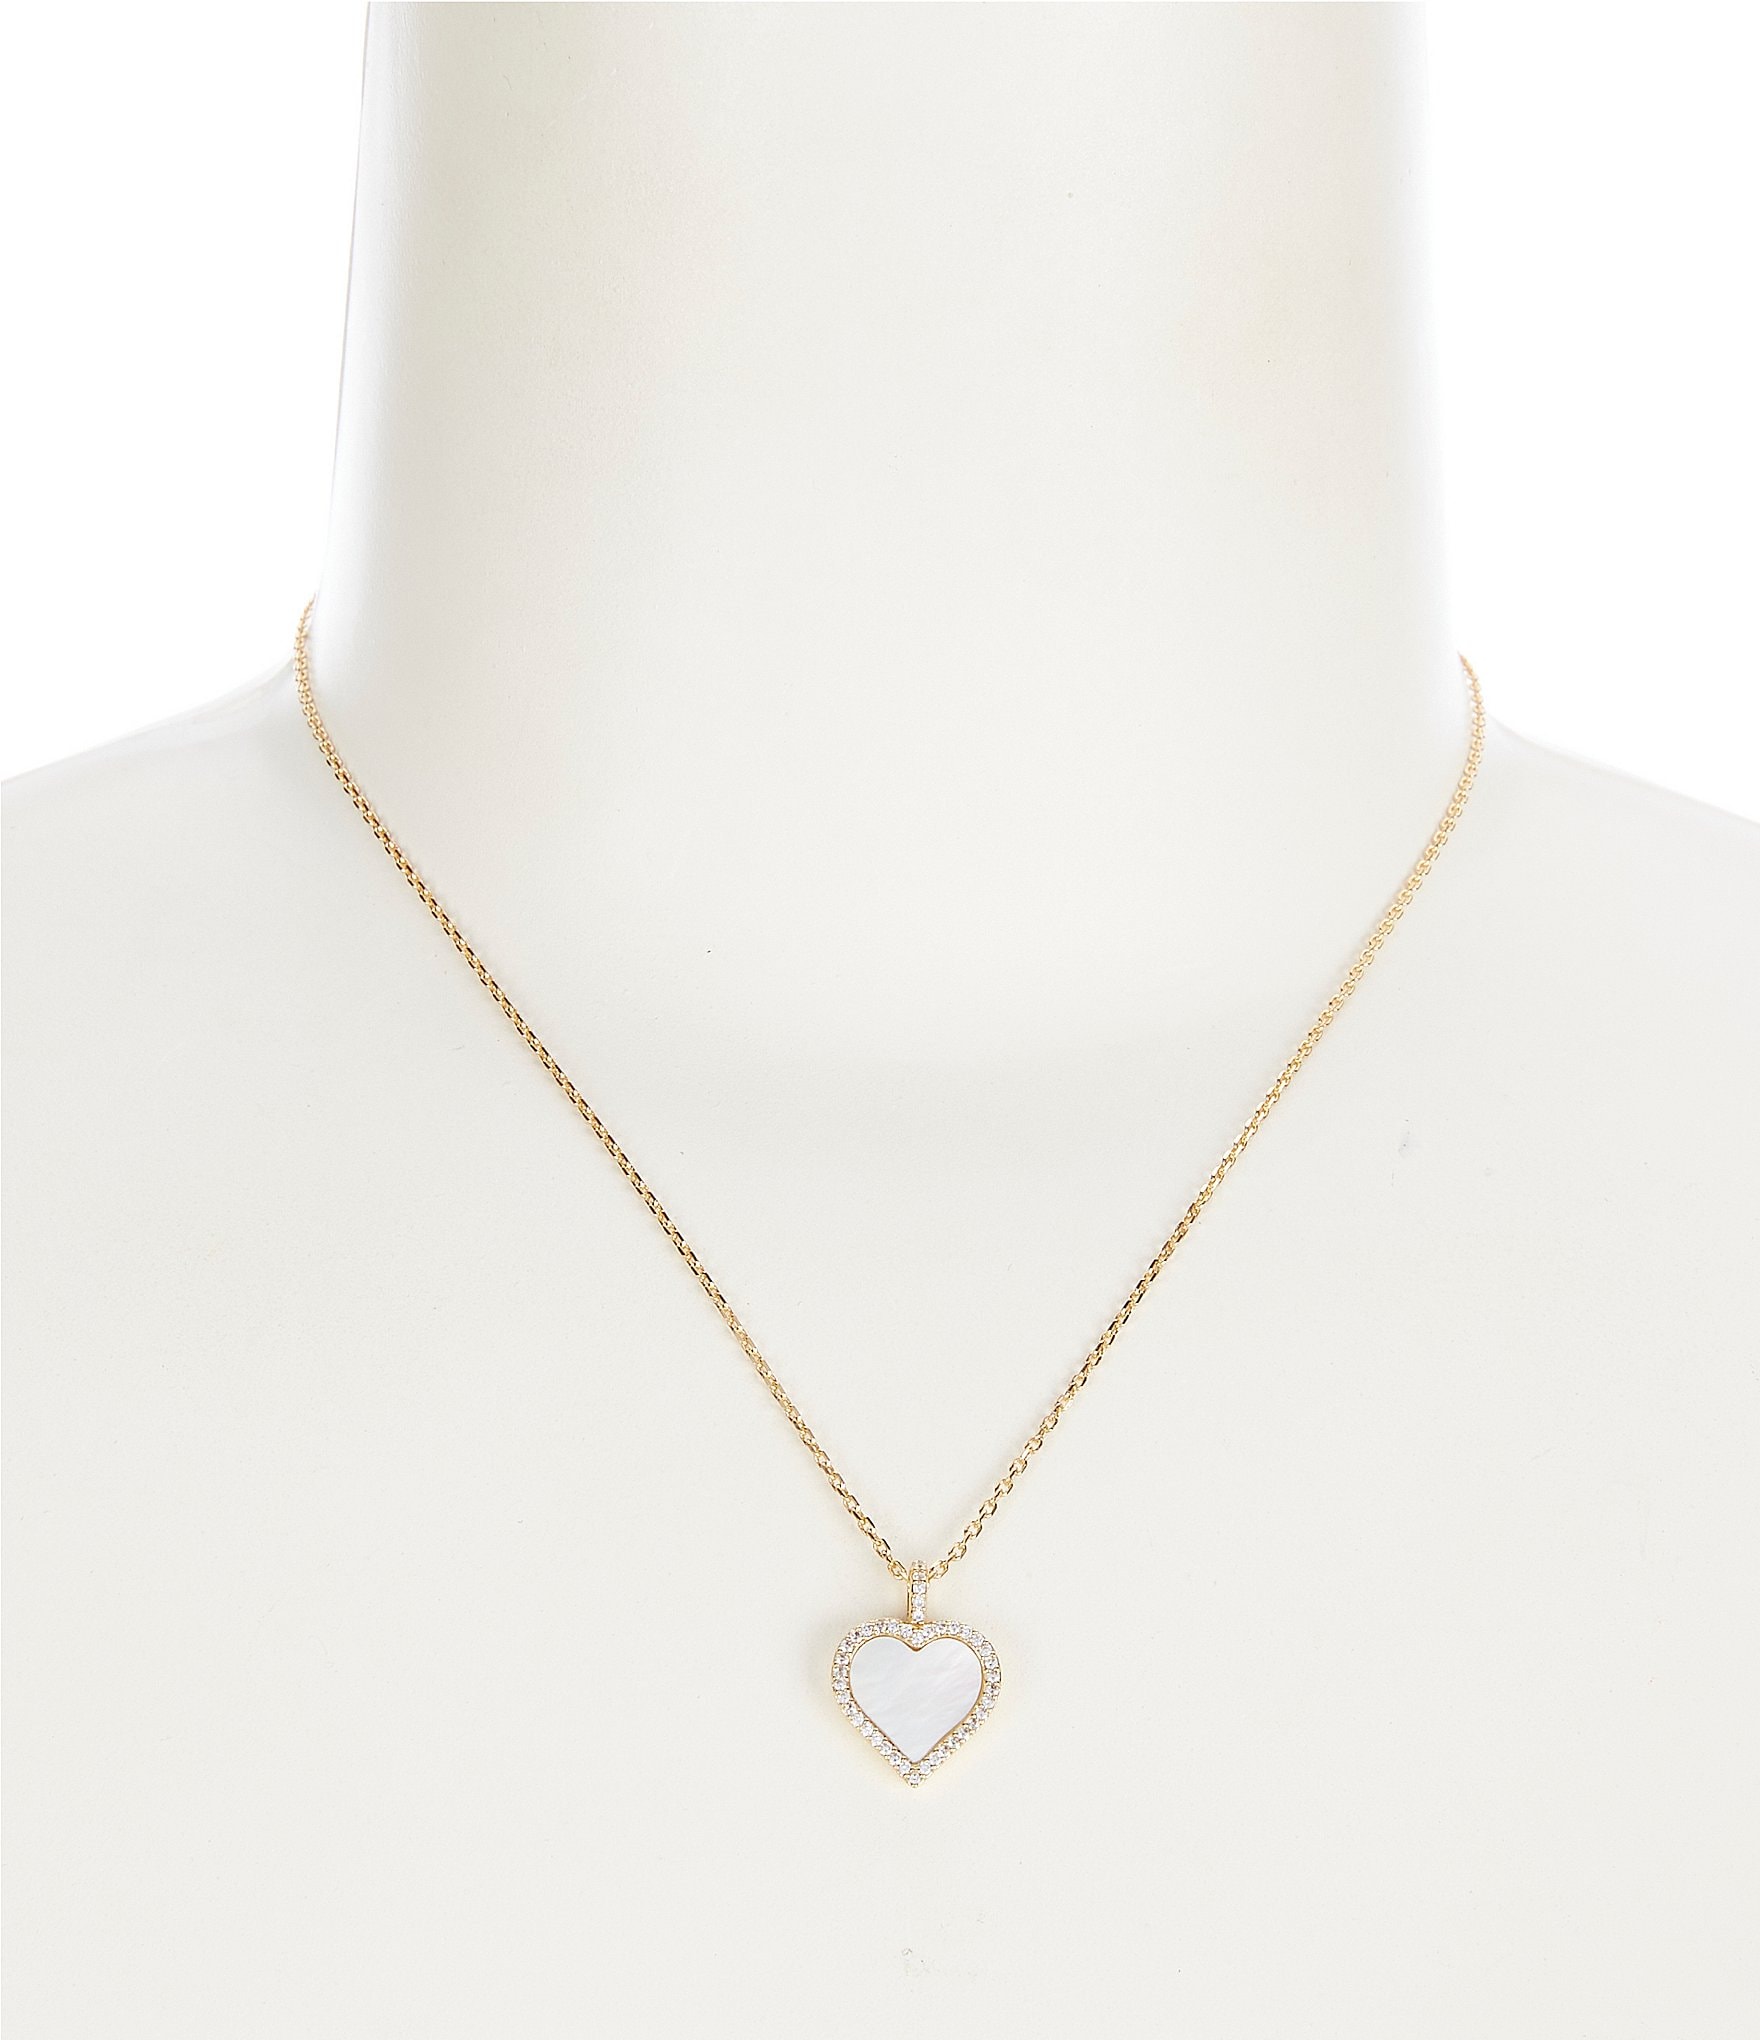 kate spade necklace: Women's Jewelry | Dillard's